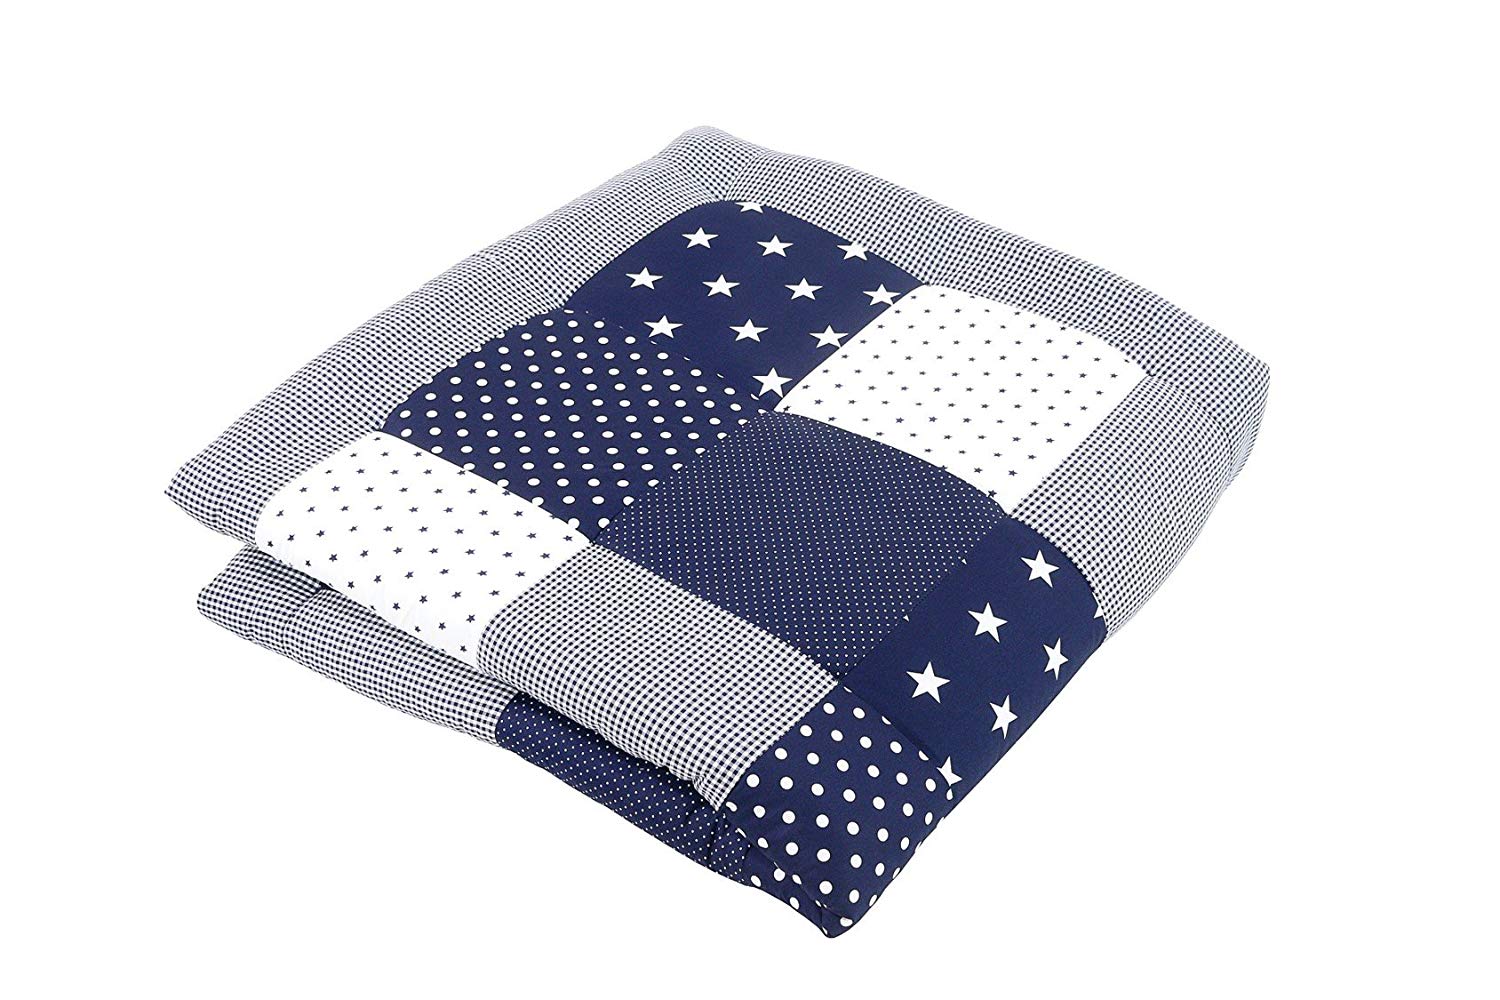 Bebi TRIOLINO Crawling Blanket with Play Mat & Playpen Liner 100x100 cm 120 x 120 cm 140x140 Large Soft Padding Blue Stars 100 x 100 cm blue, white